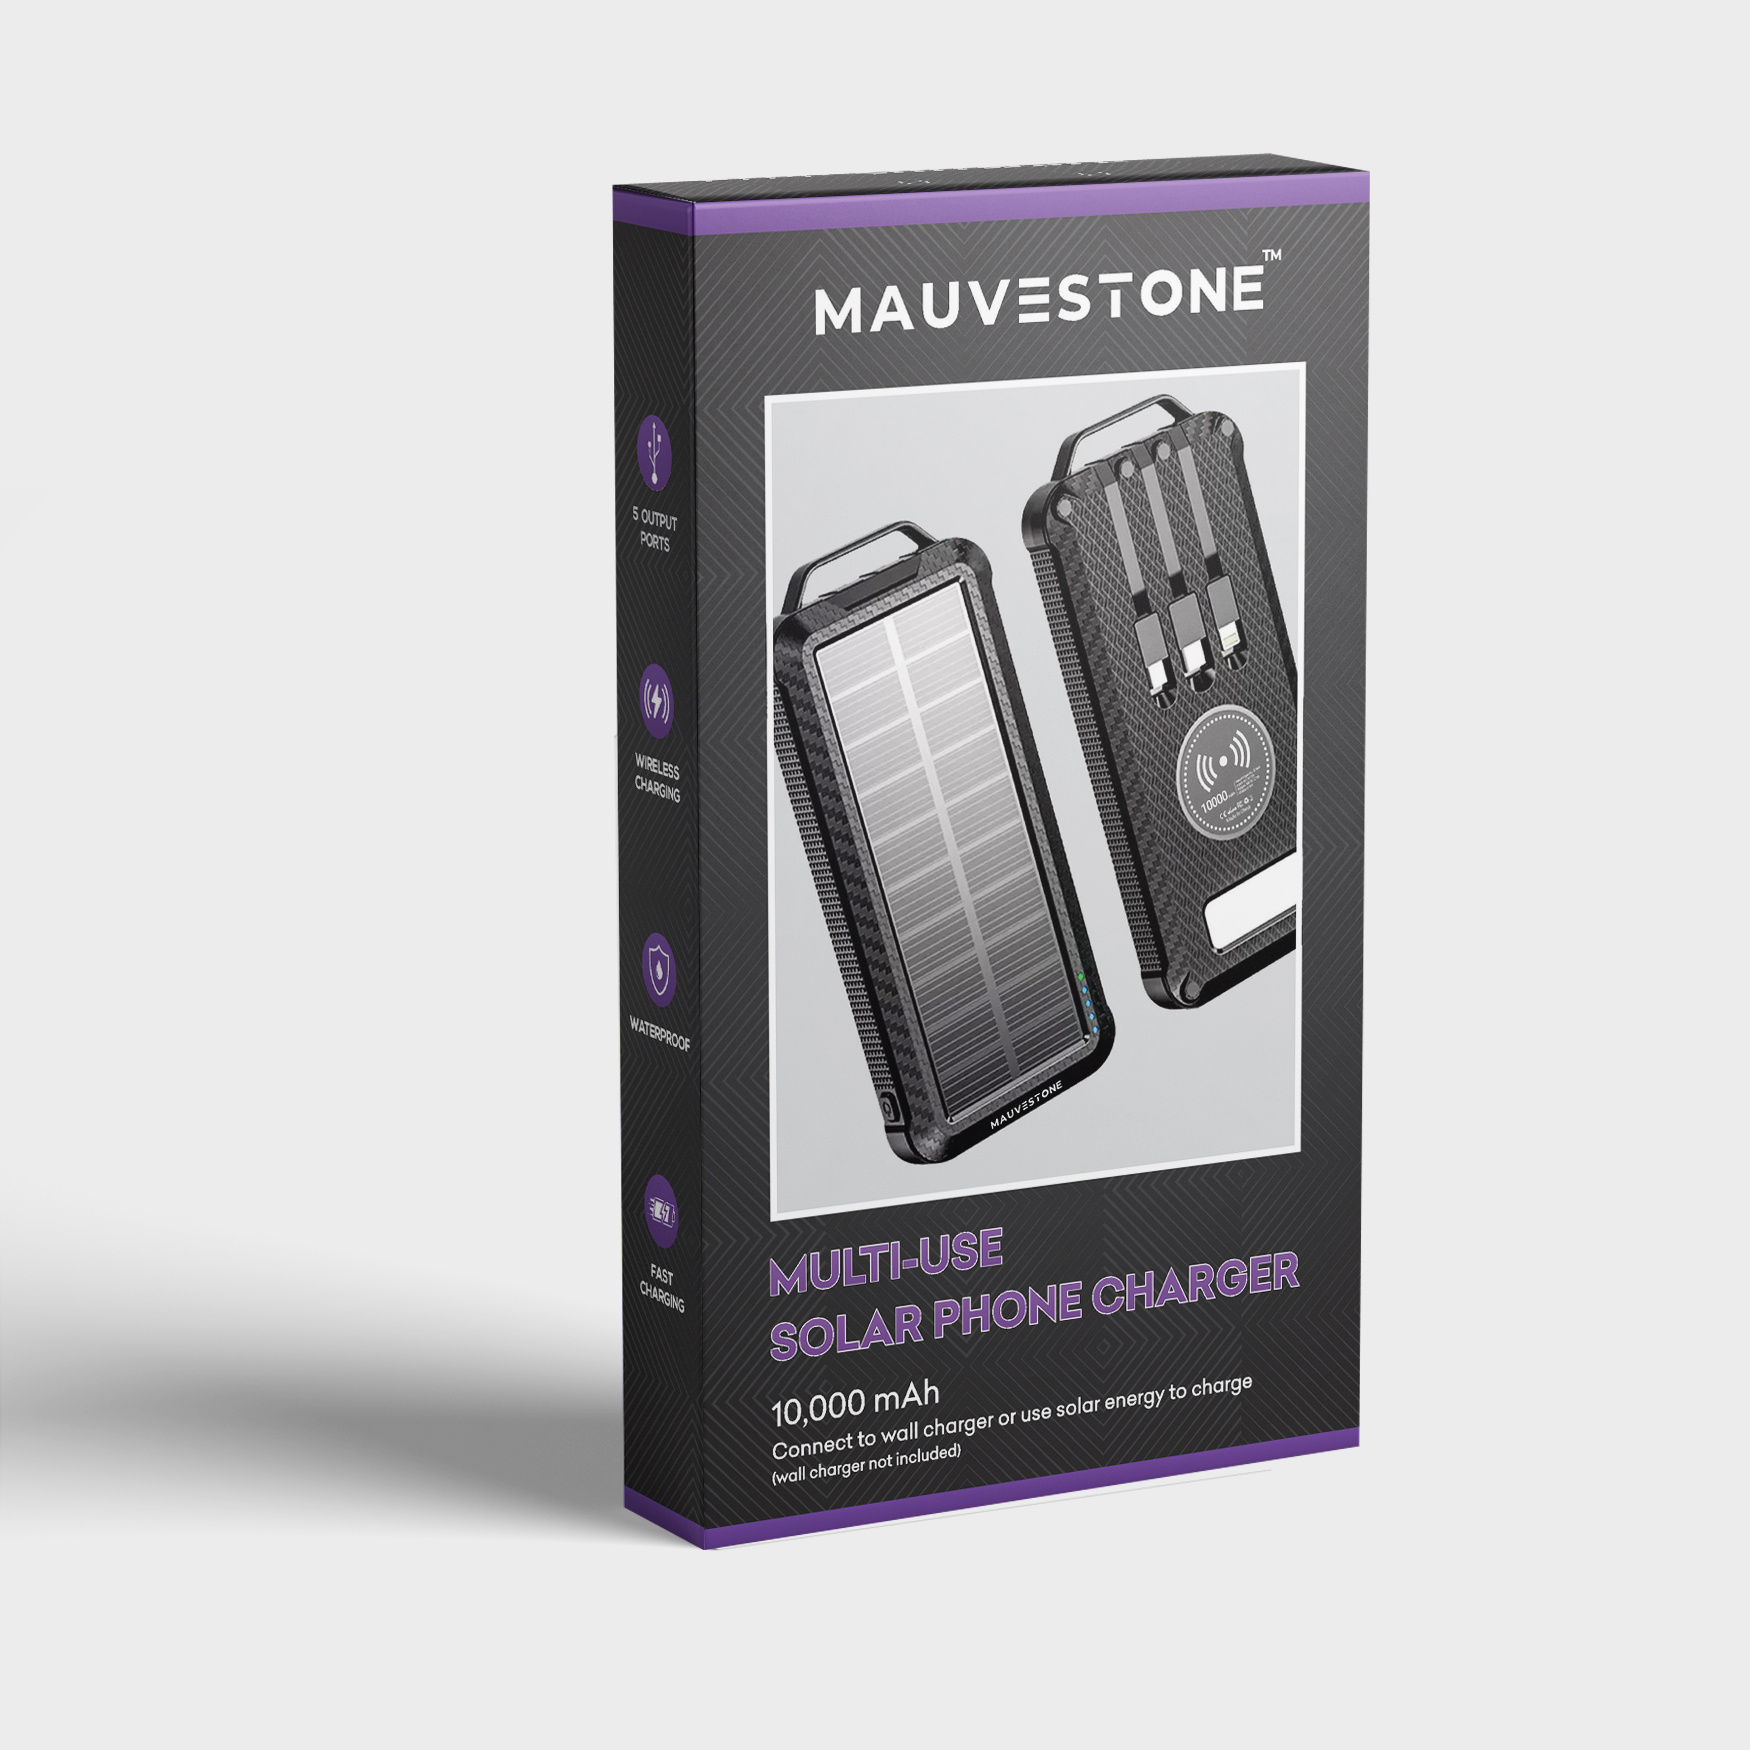 MauveStone Introduces MauveStone: Multi-Use Solar Power Charger, Revolutionizing Portable Charging